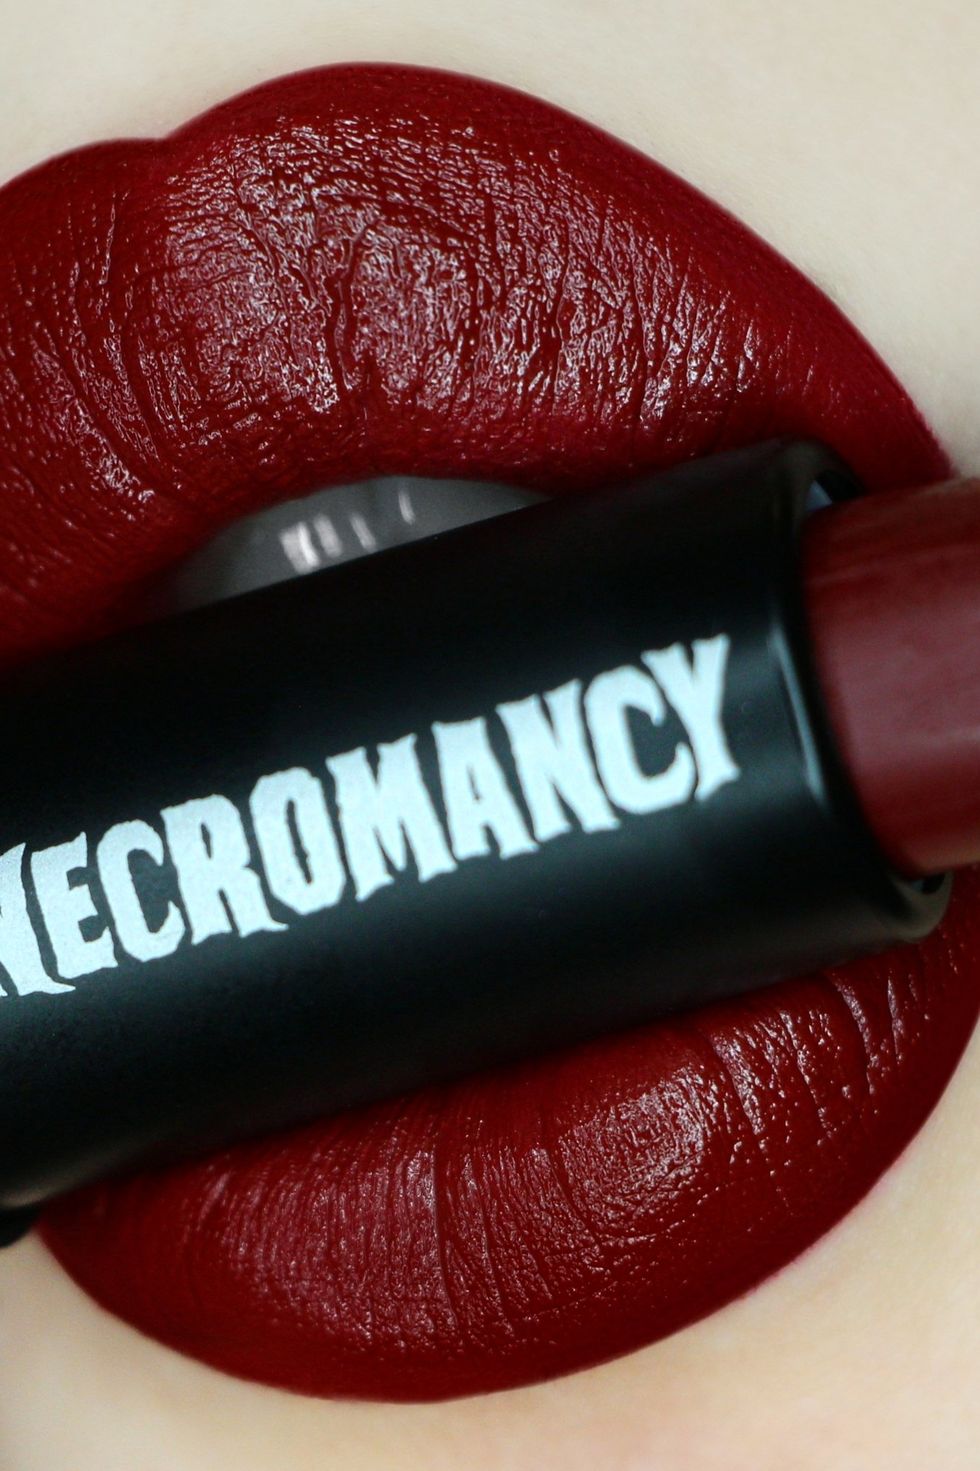 Necromancy Cosmetica Lipstick in Carnal Sin